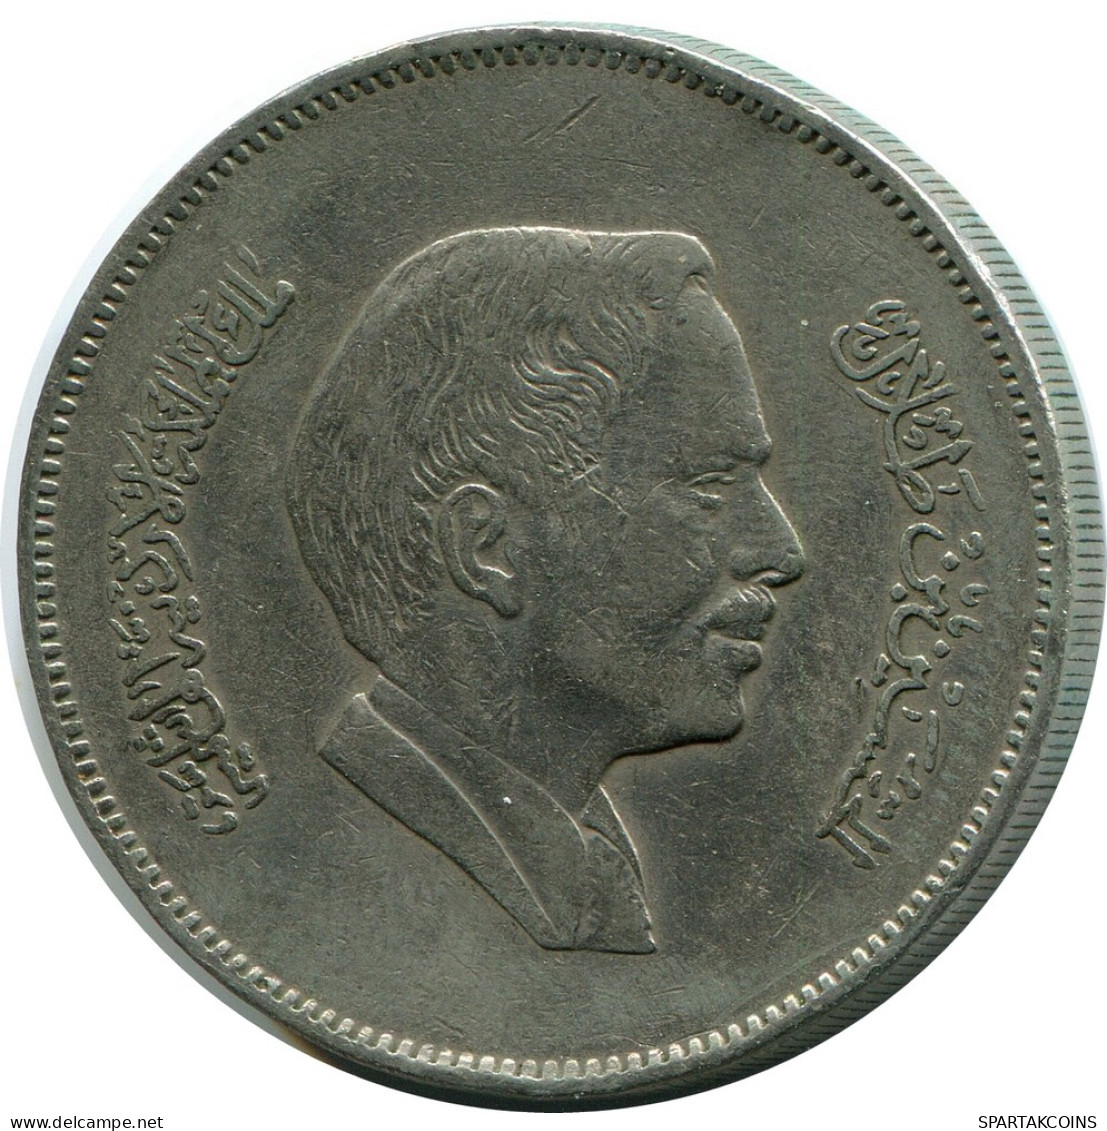 1 DIRHAM / 100 FILS 1981 JORDAN Coin #AP101.U - Jordanien